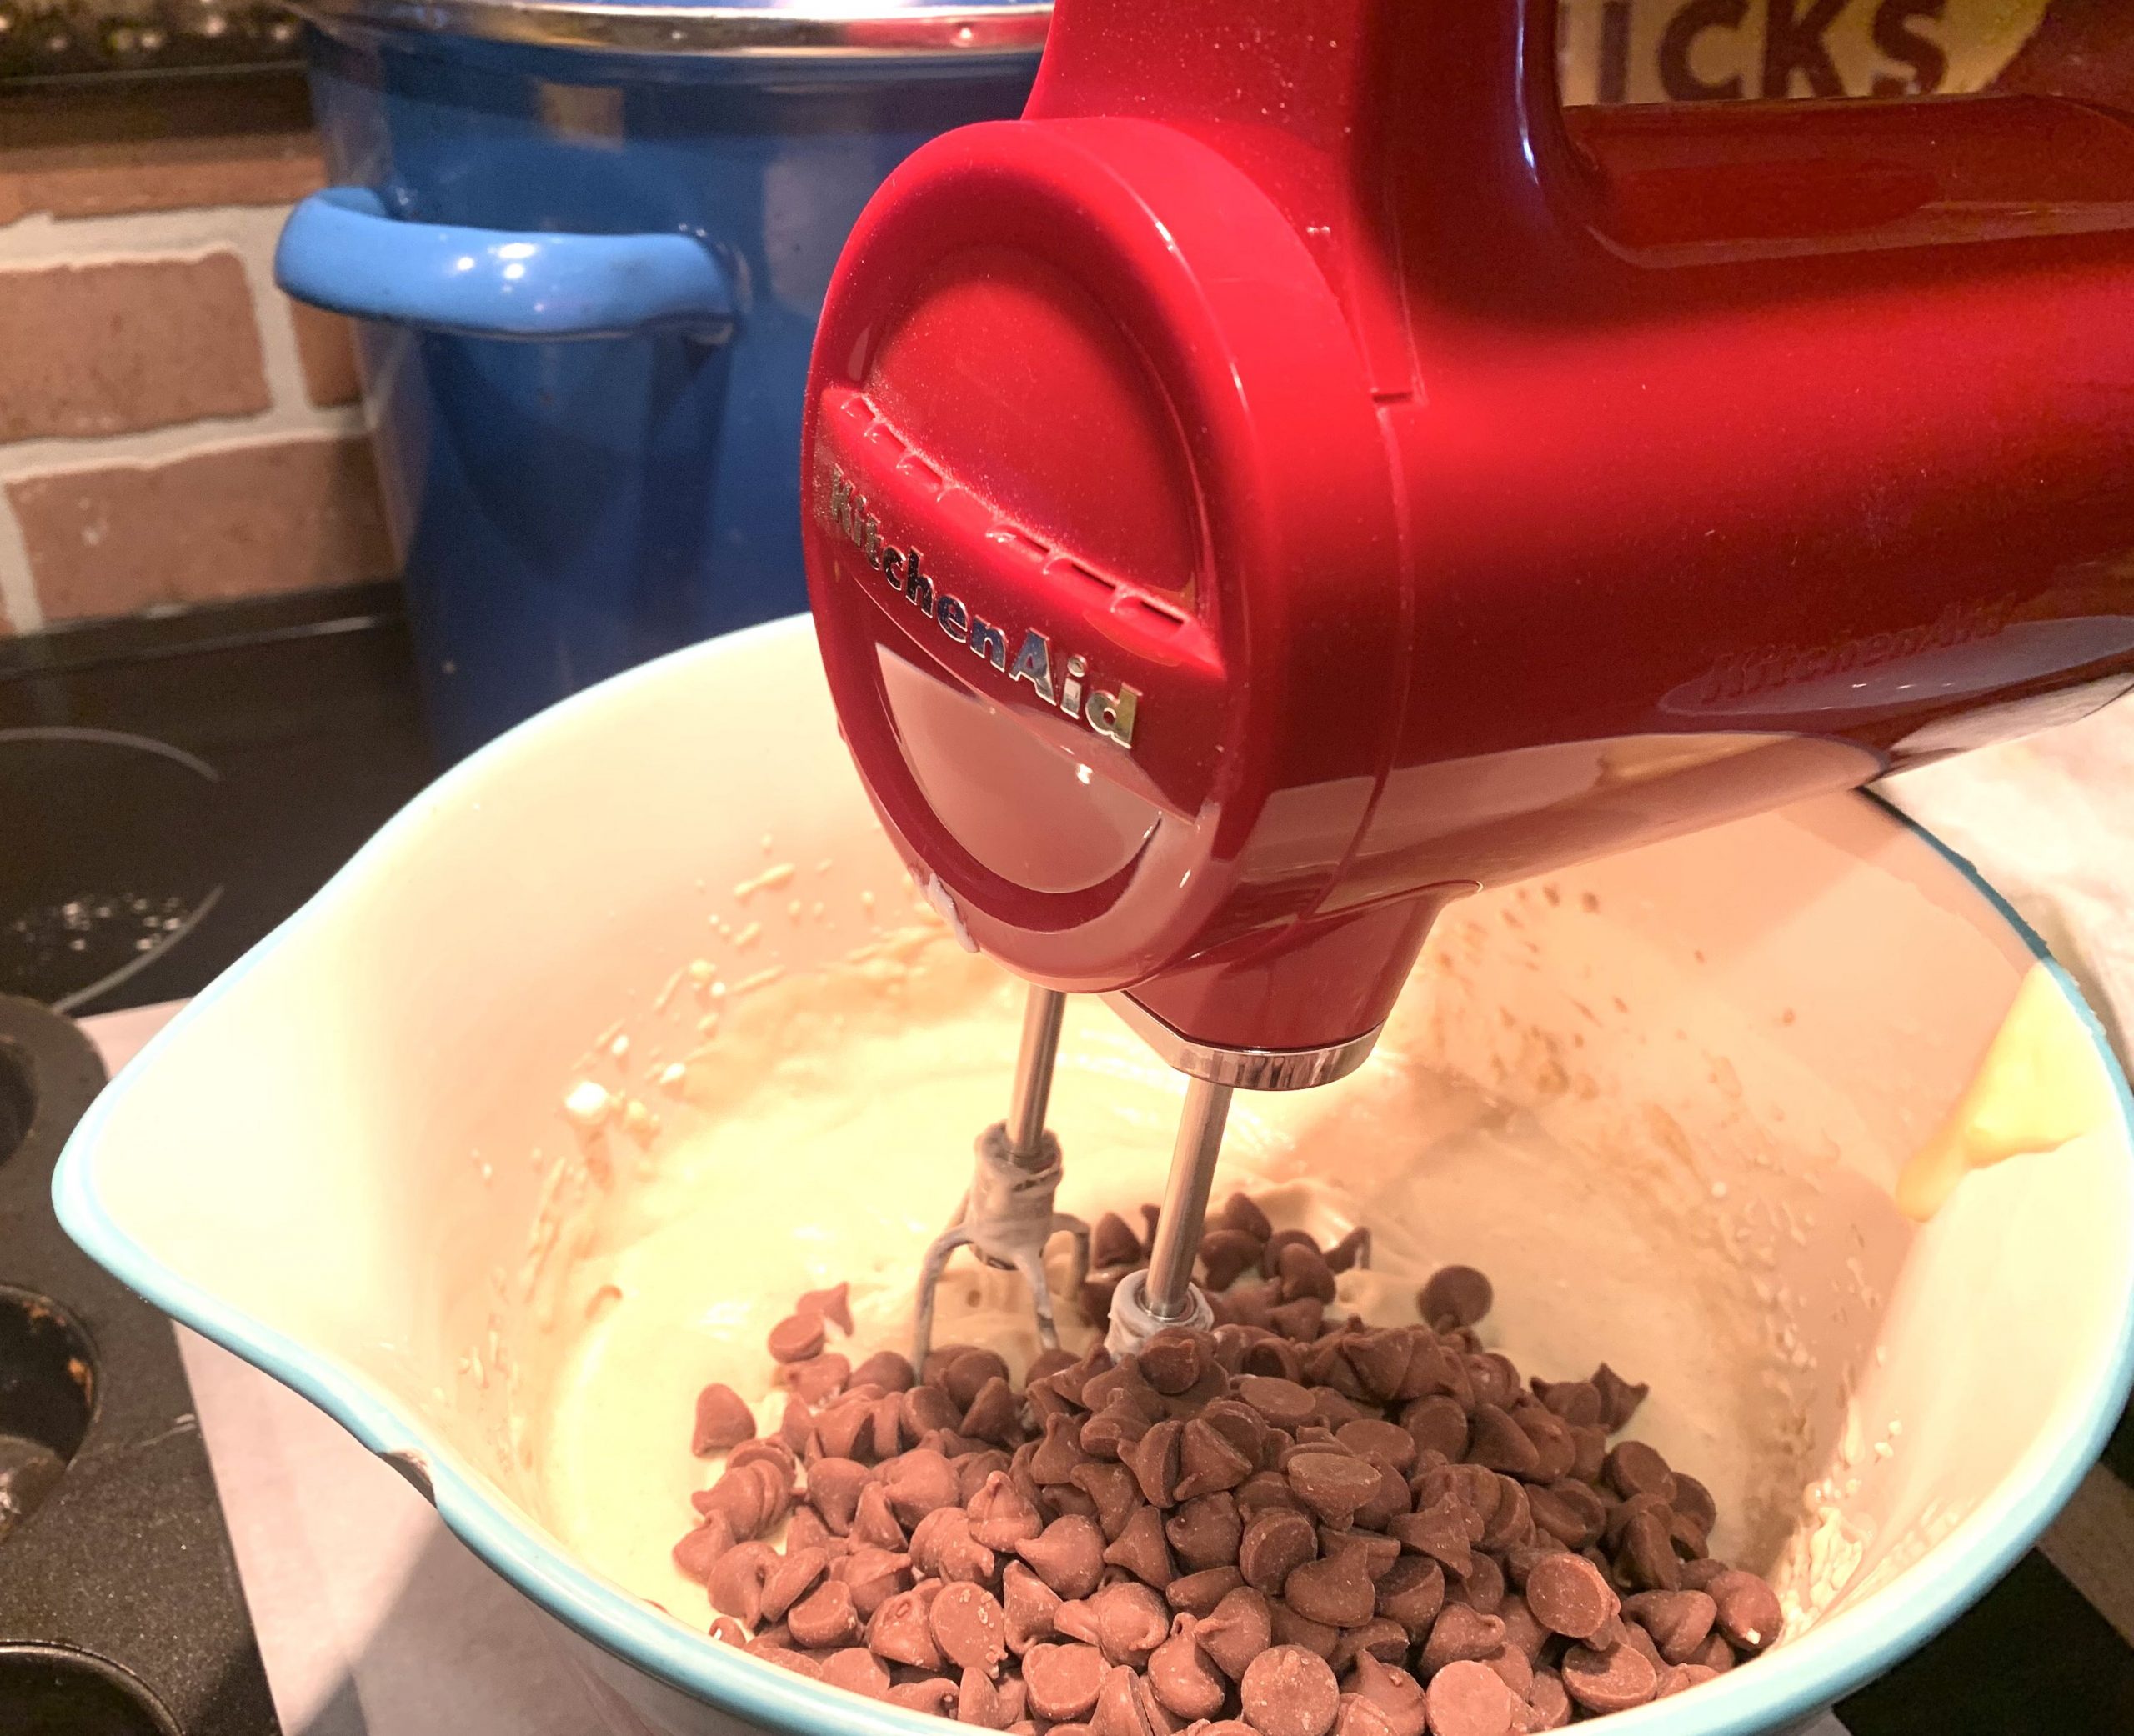 KitchenAid Cordless 7 Speed Hand Mixer Review